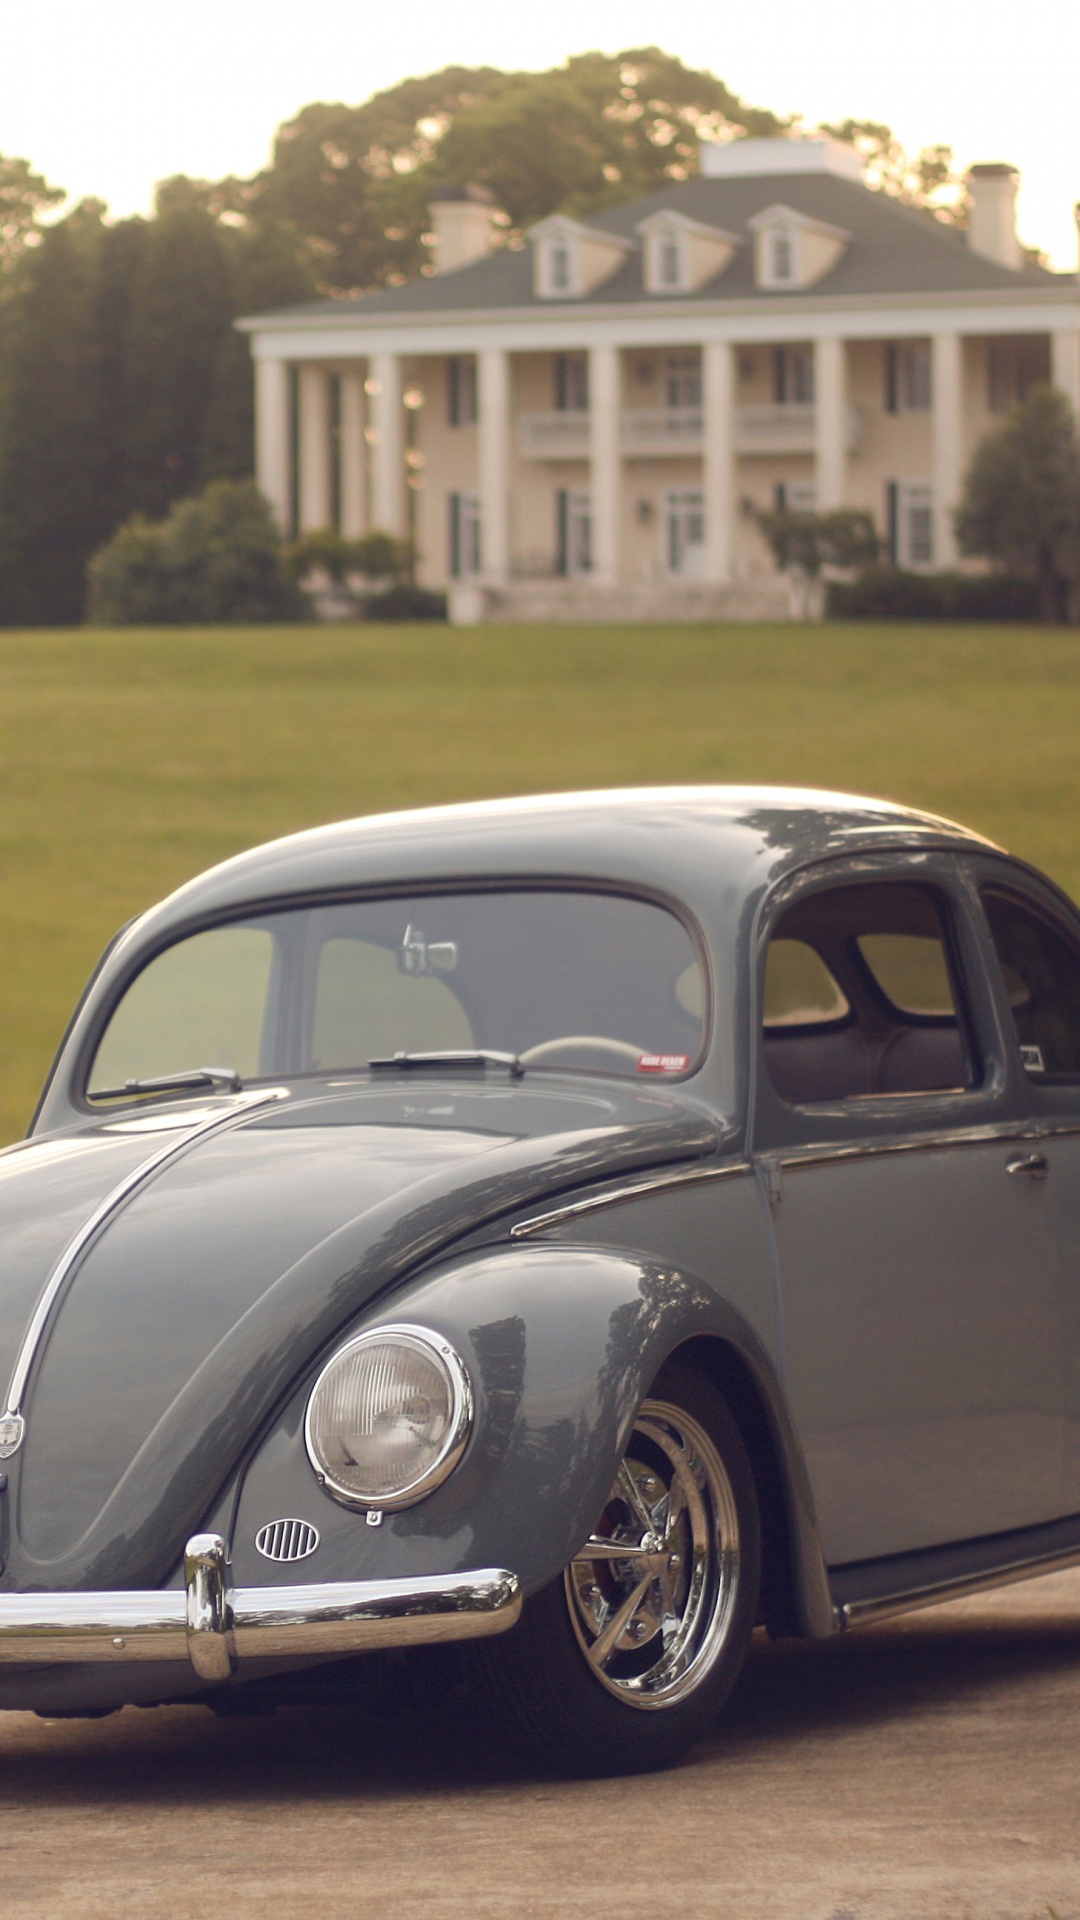 Black Volkswagen Beetle on Green Grass Field During Daytime. Wallpaper in 1080x1920 Resolution